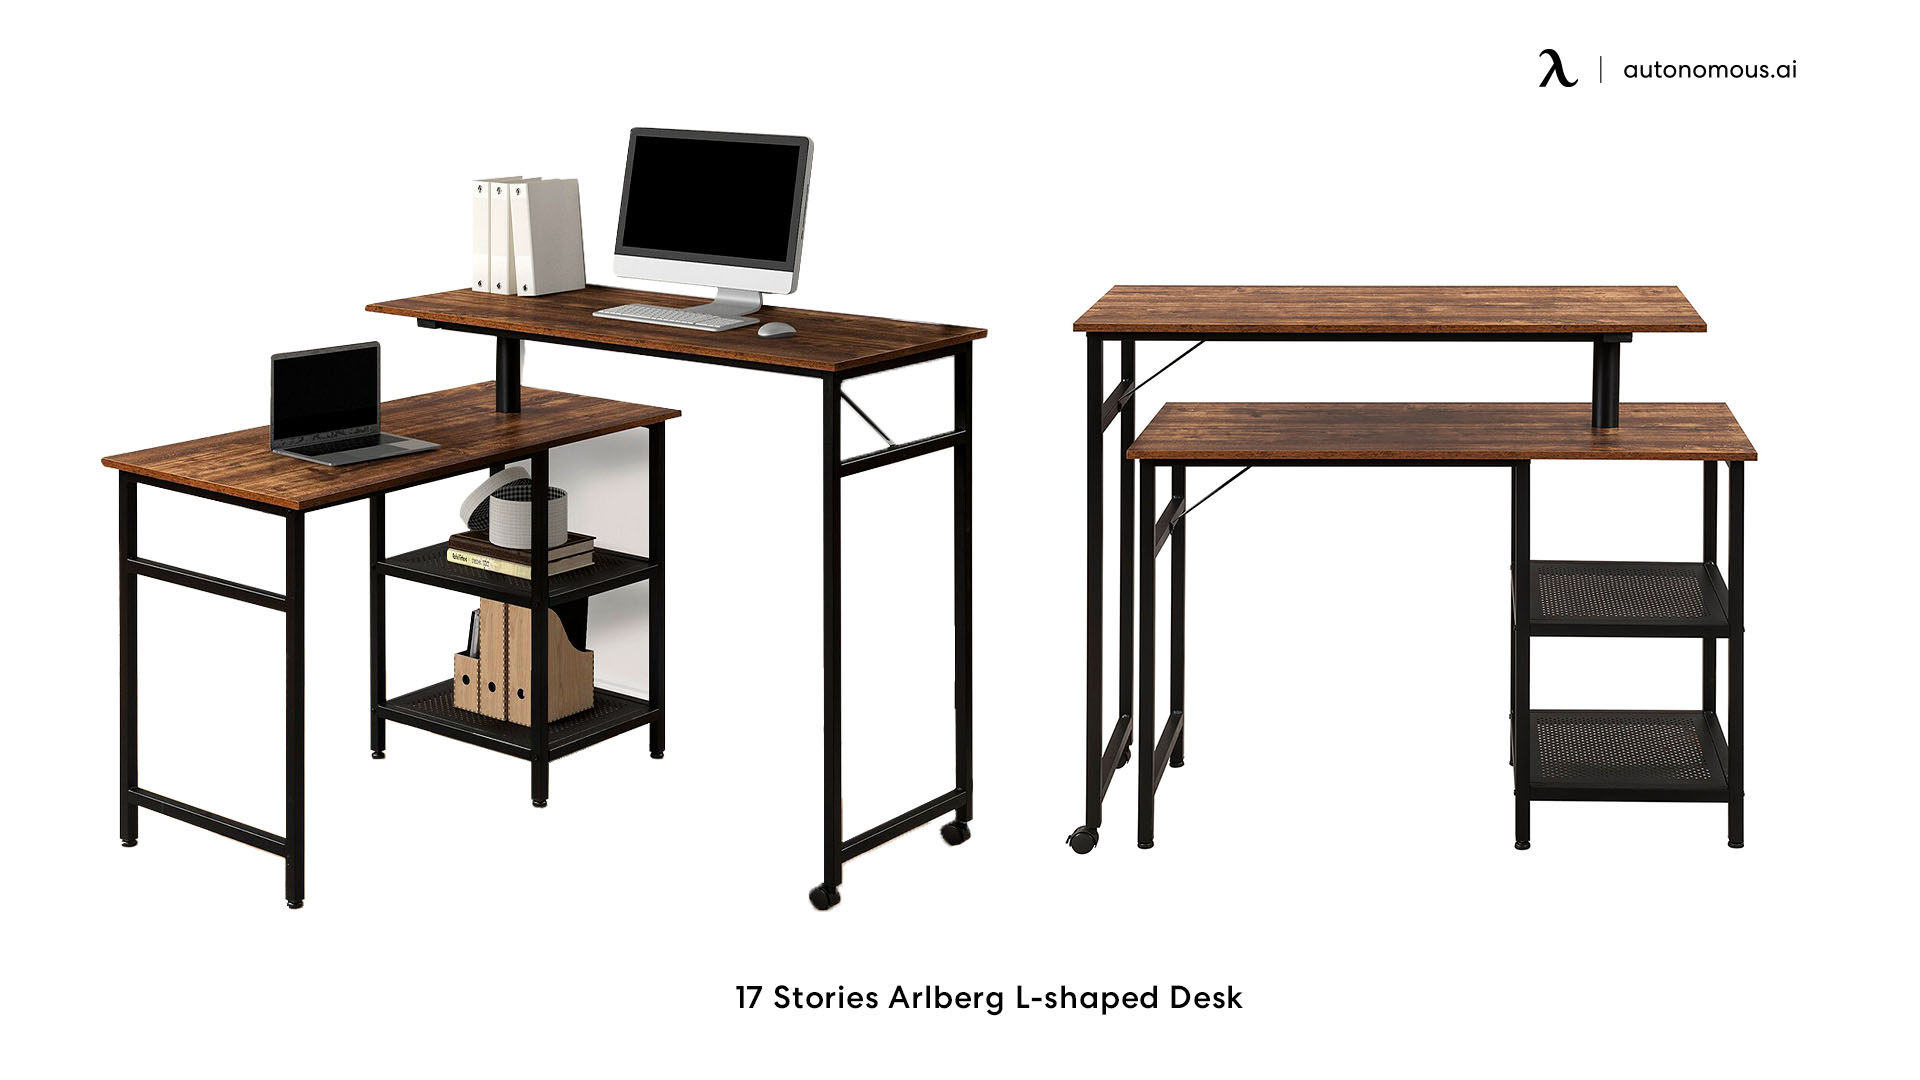 17 Stories Arlberg L-shaped Desk